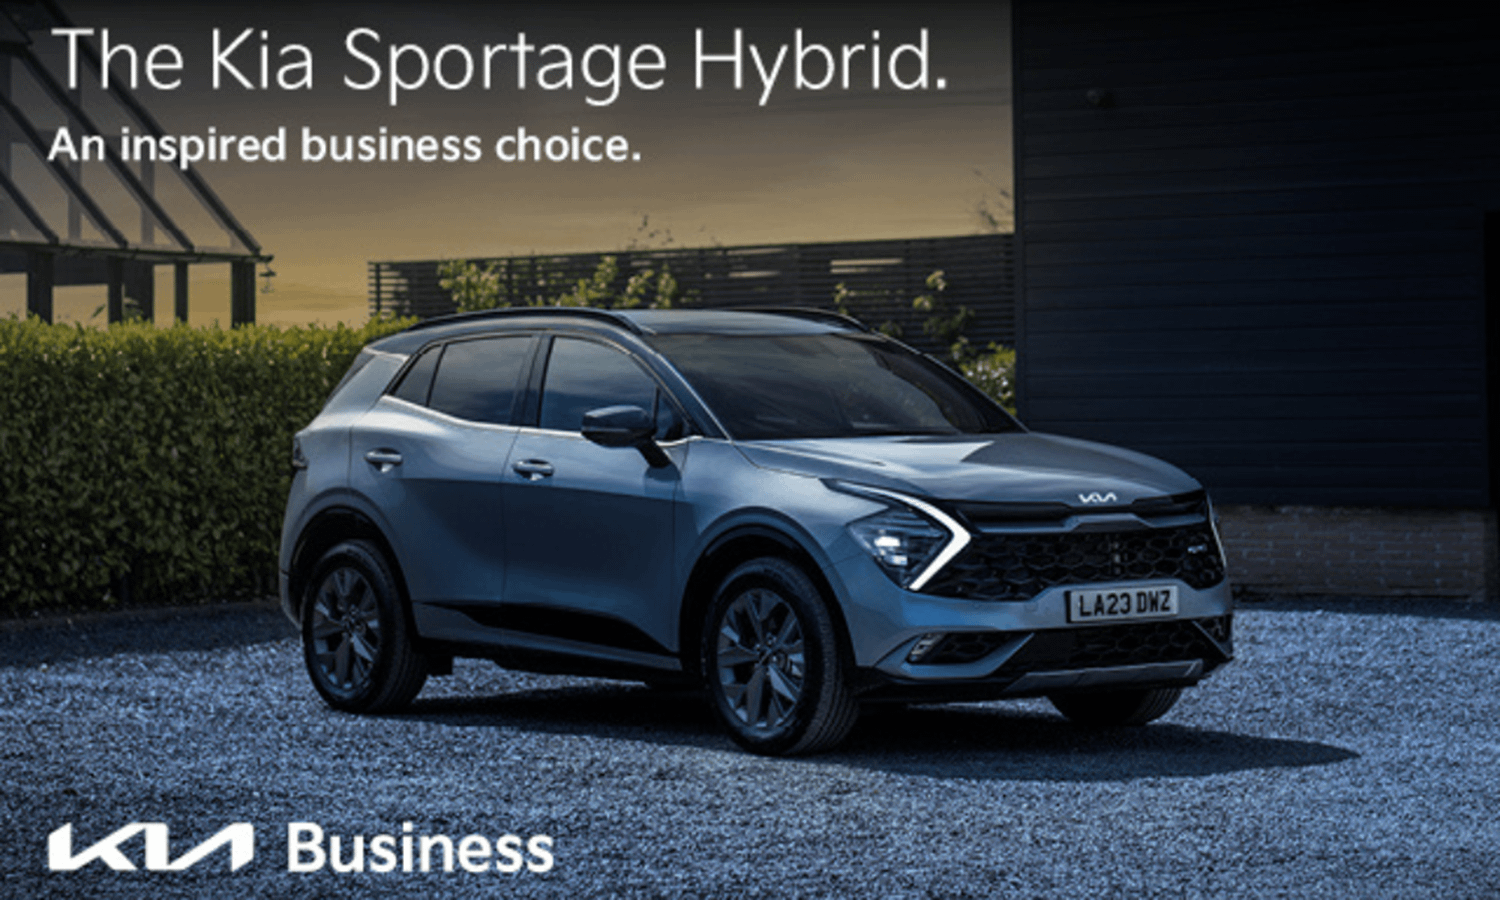 Kia Sportage Hybrid business vehicle